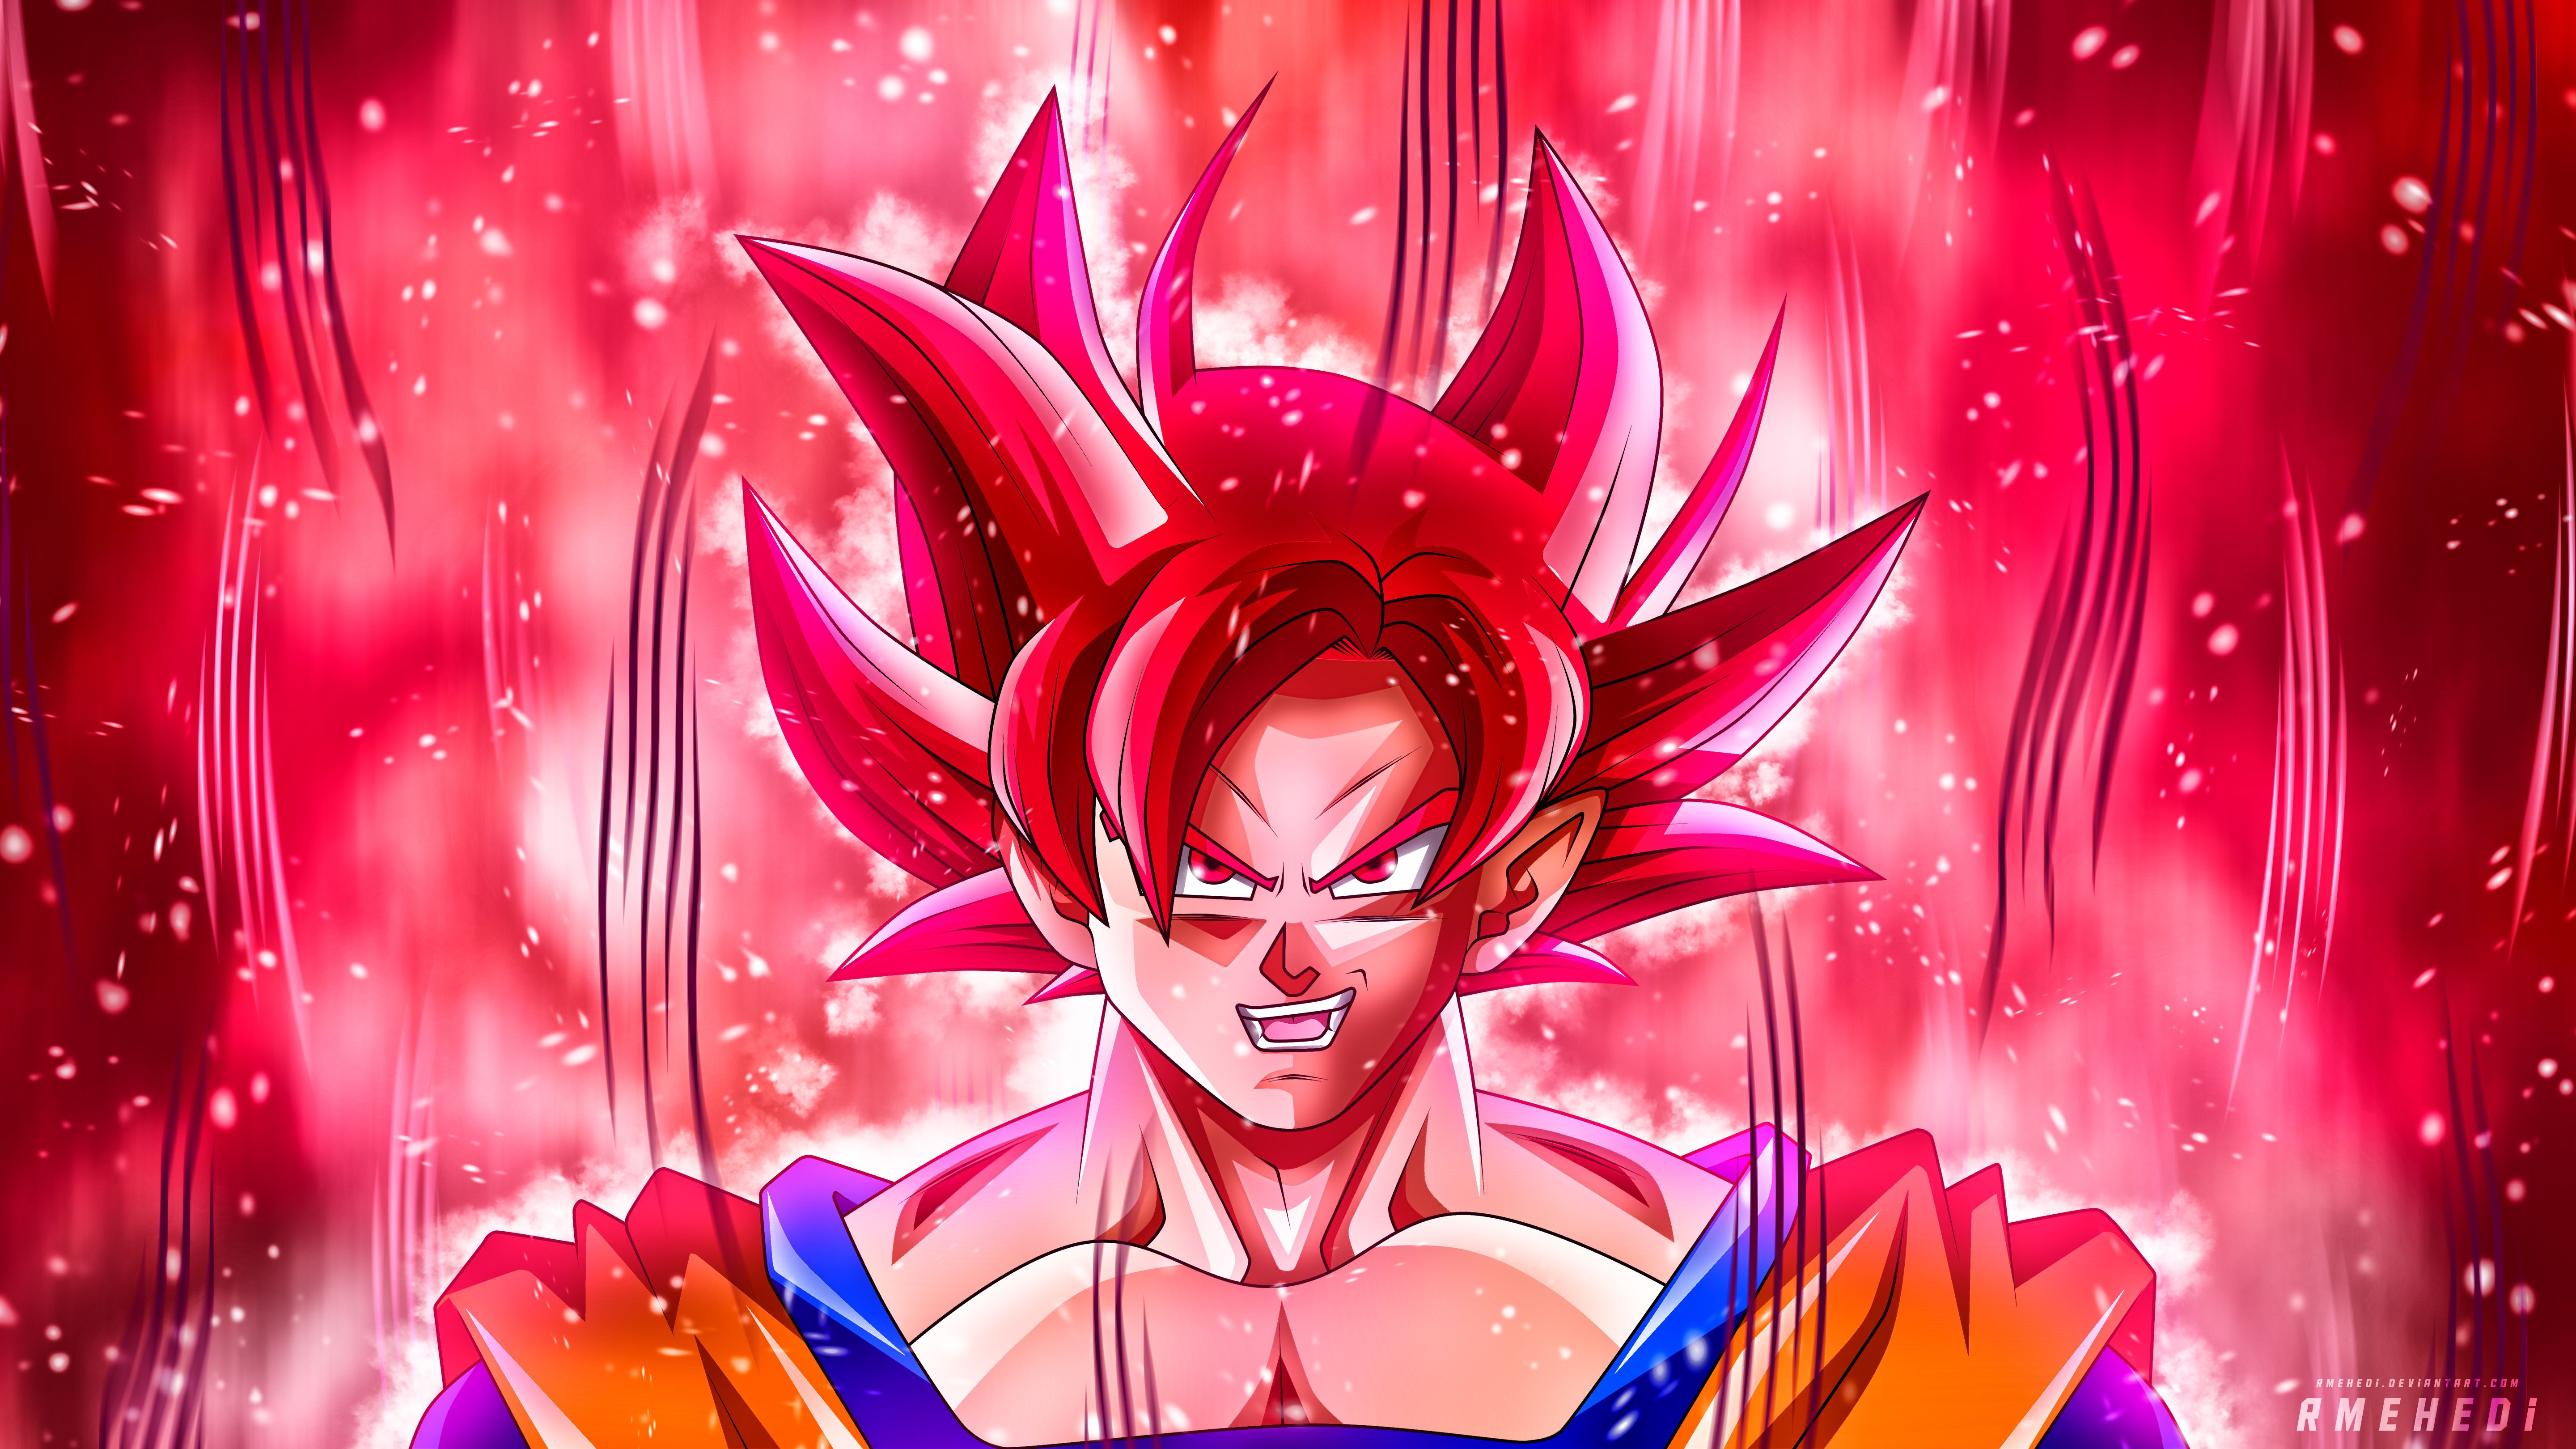 Goku Super Saiyan God 5k, HD Anime, 4k Wallpaper, Image, Background, Photo and Picture